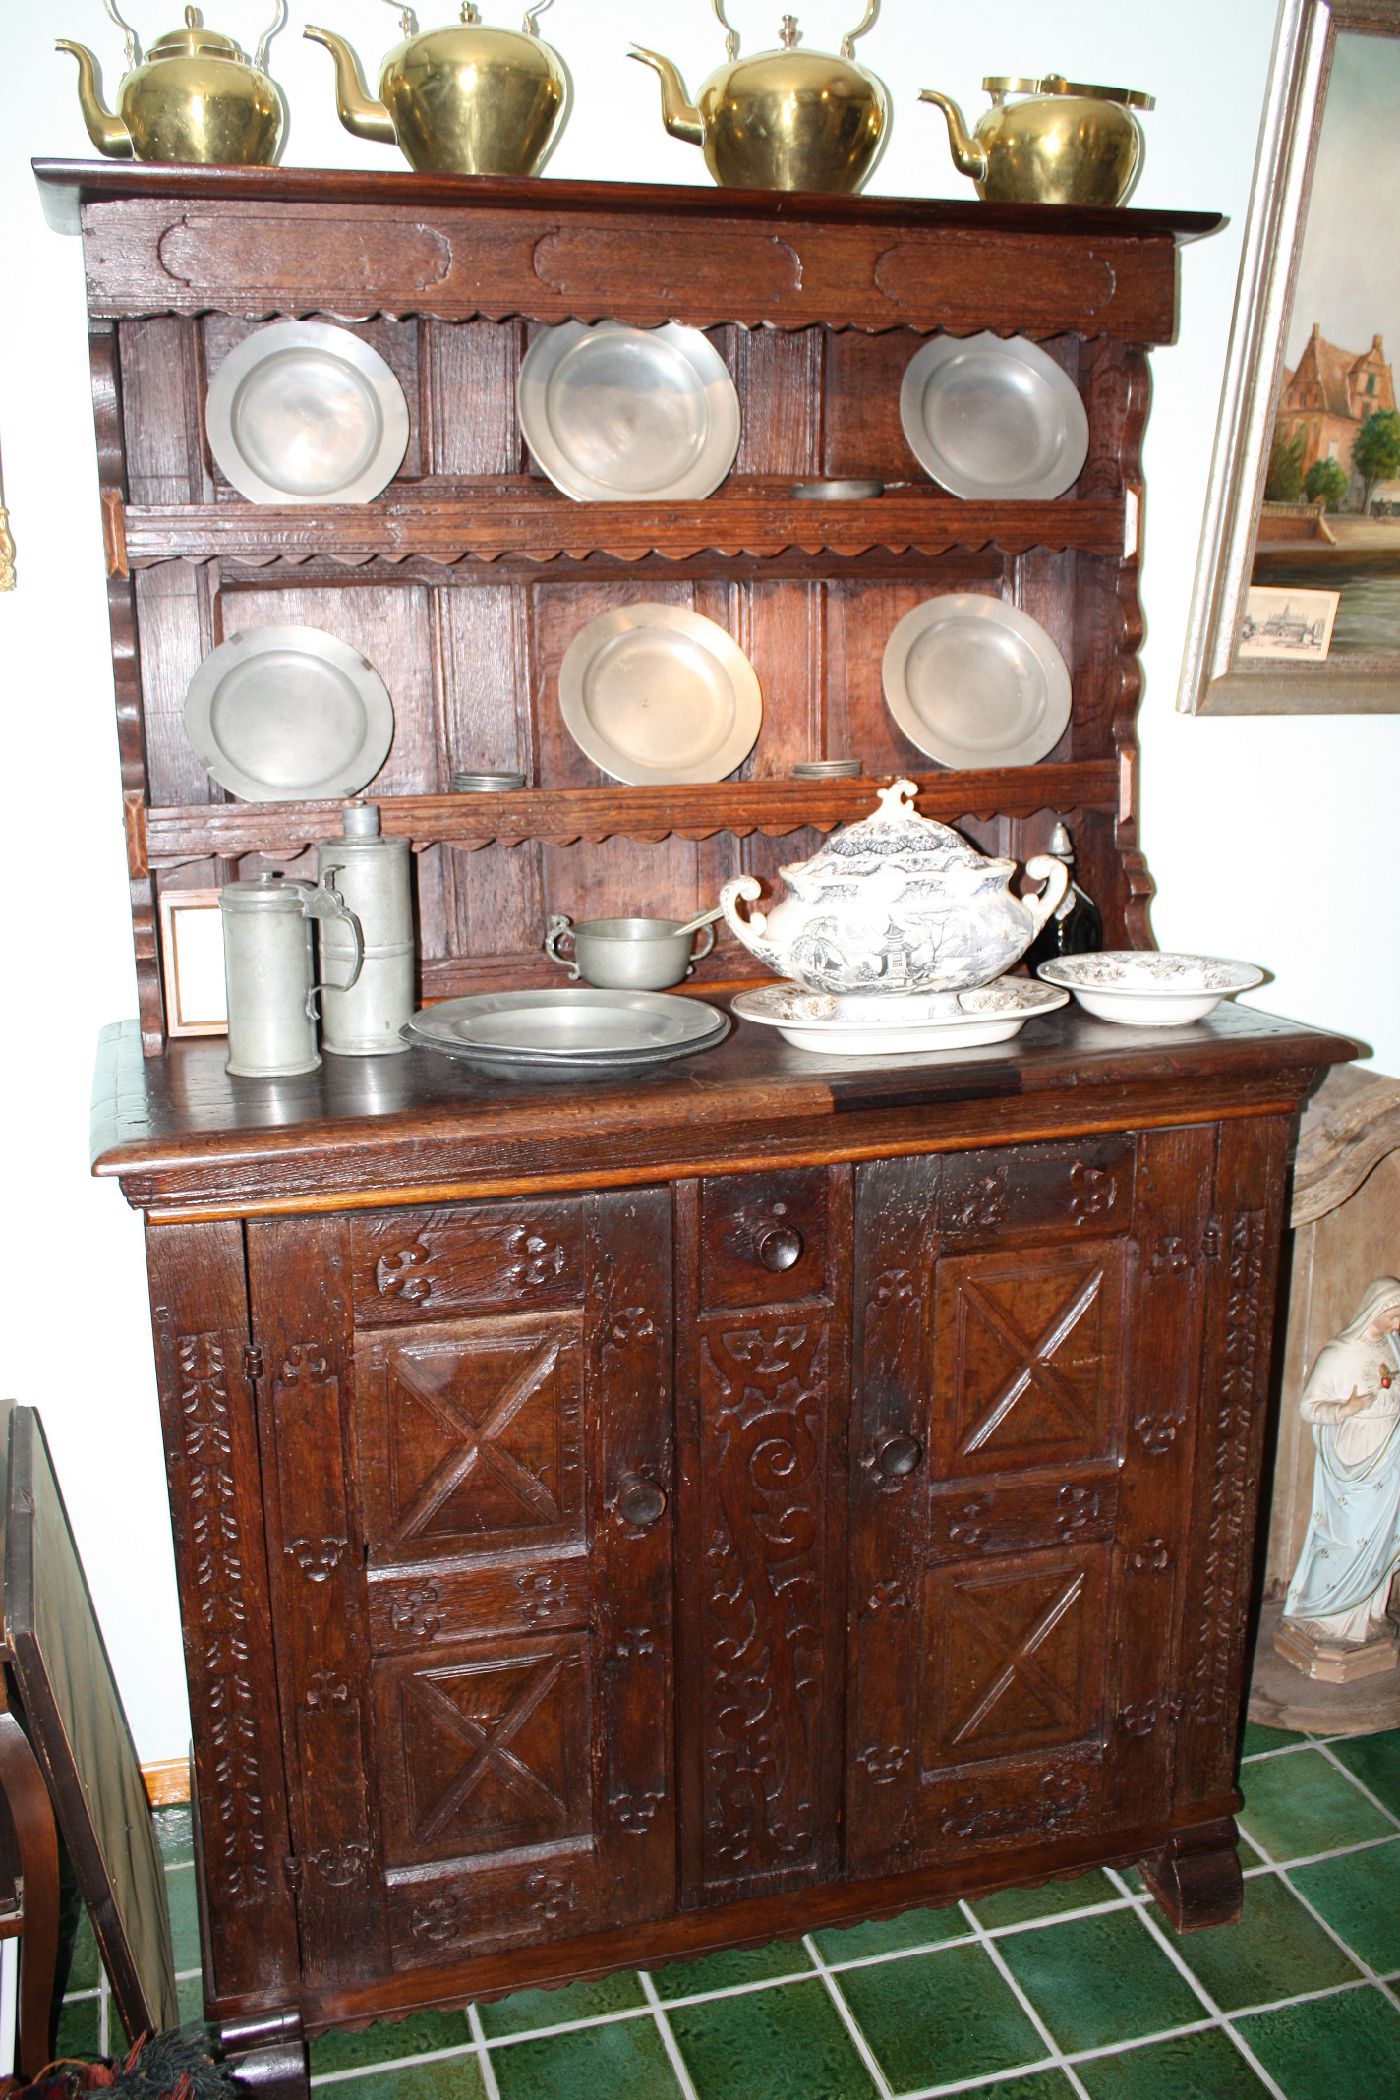 Early 18th century oak wood frisian dish cabinet